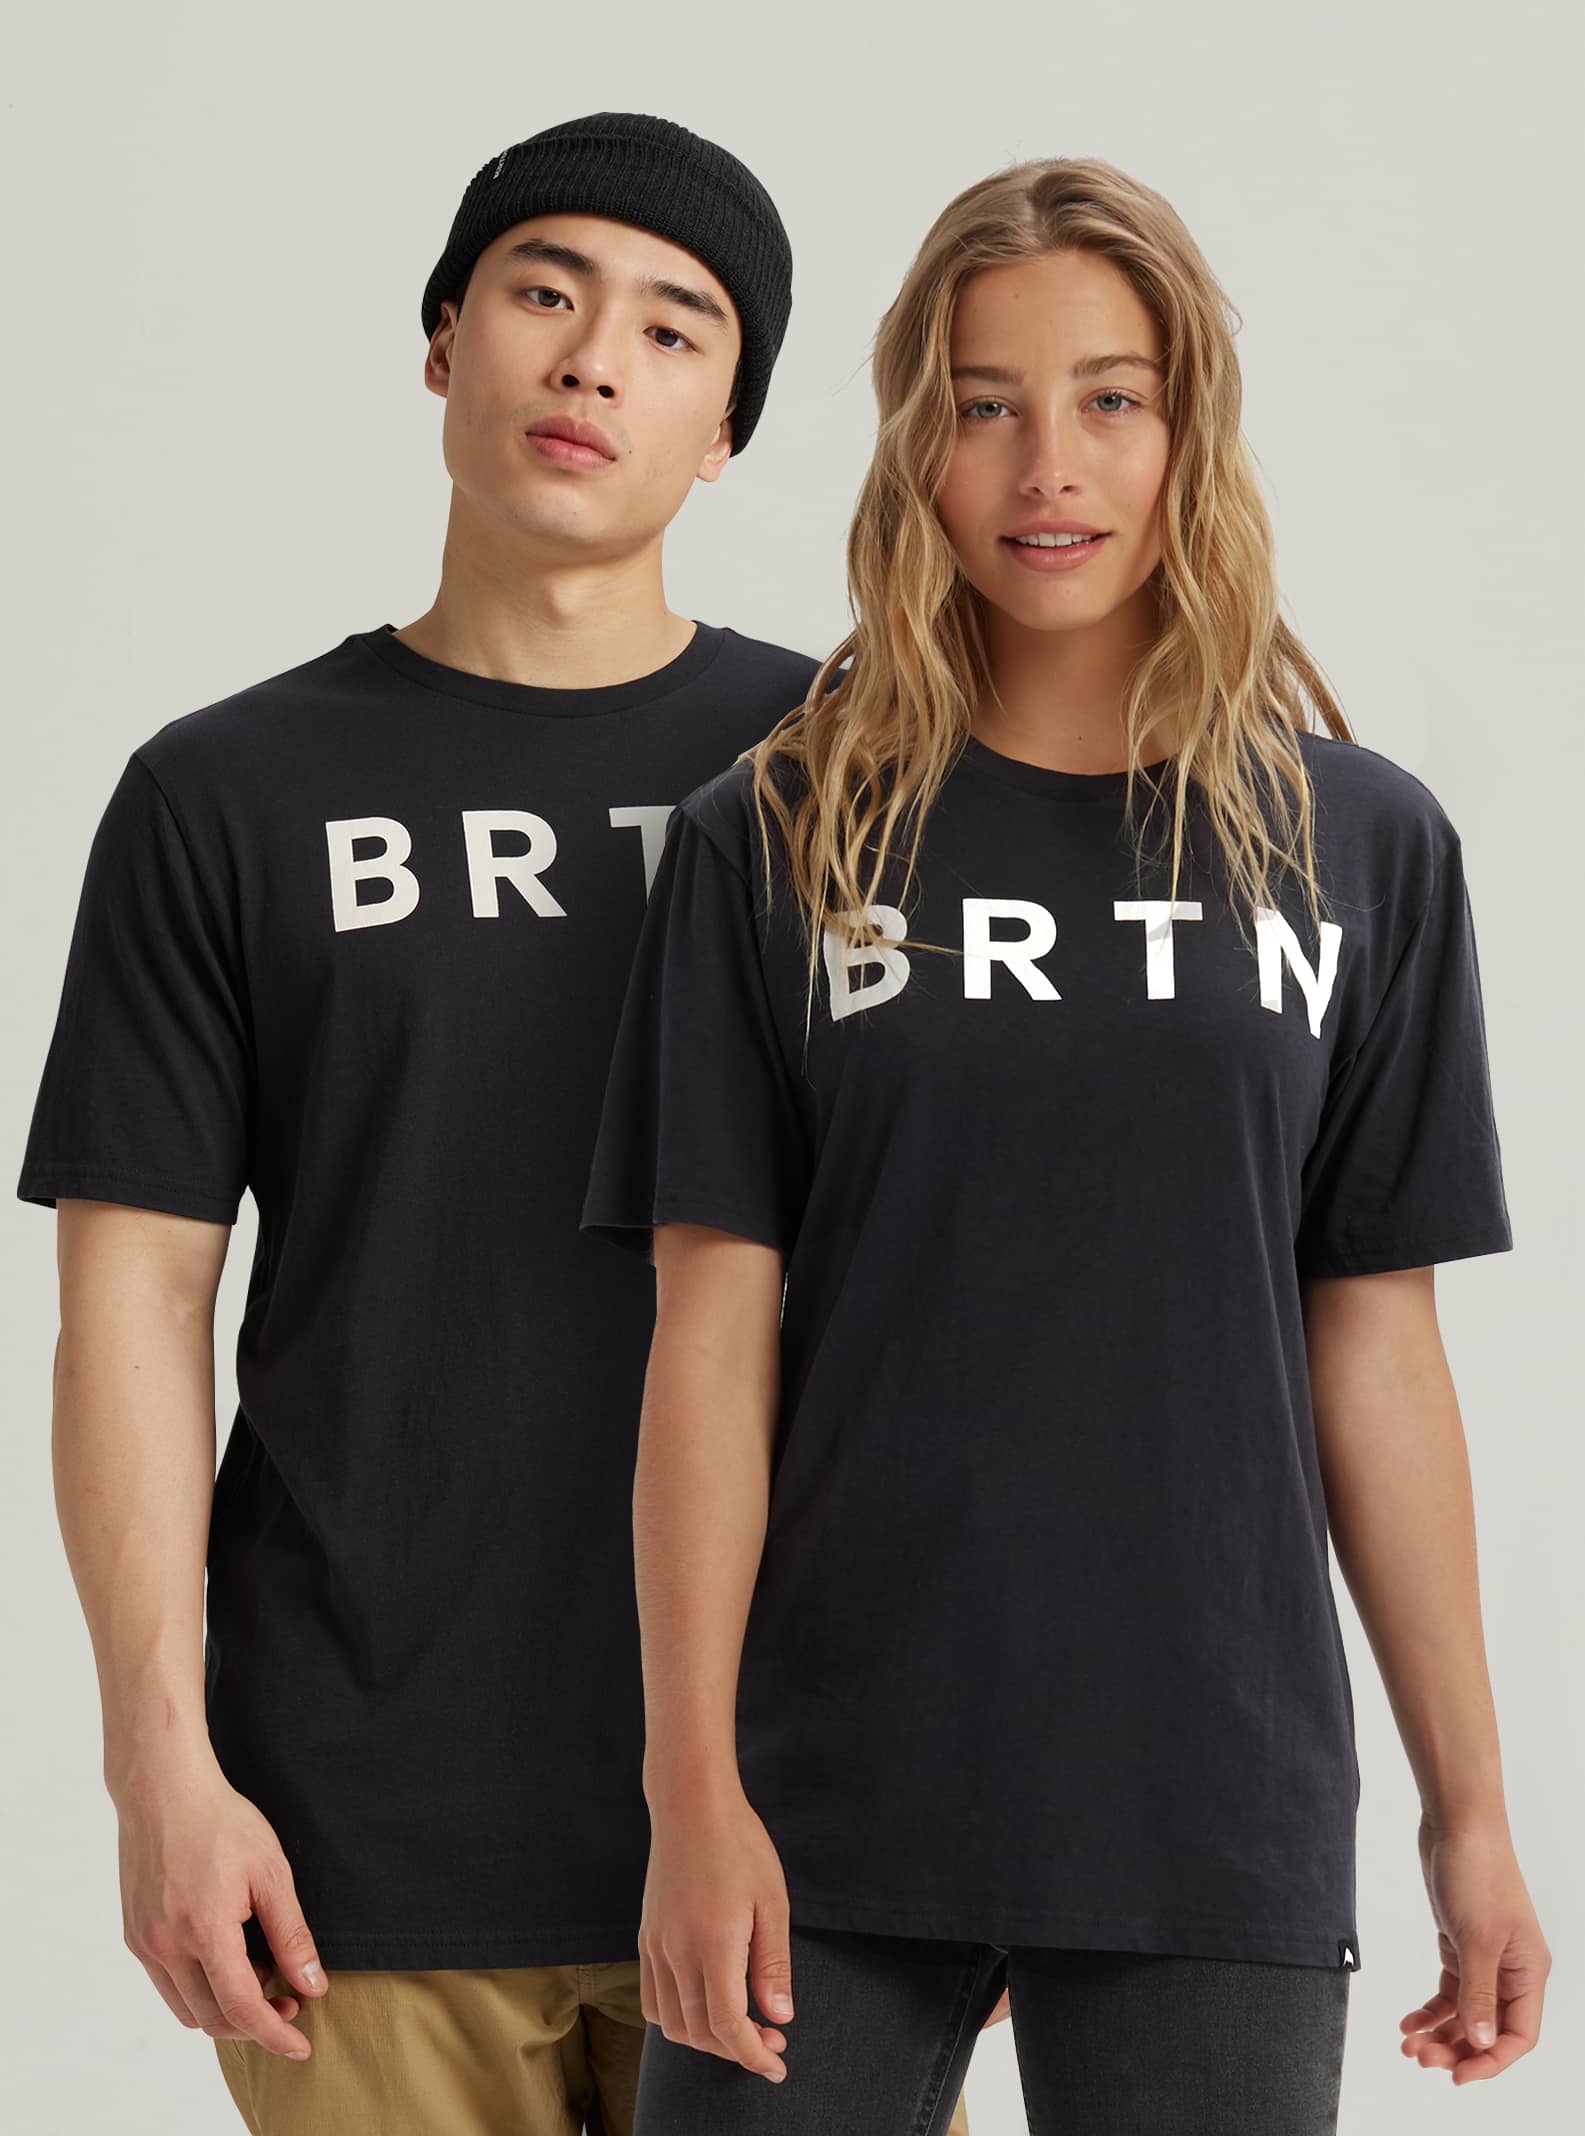 Burton Snowboarding Design Mens T-Shirt Sport Gym Casual Shirts Personalized Tee